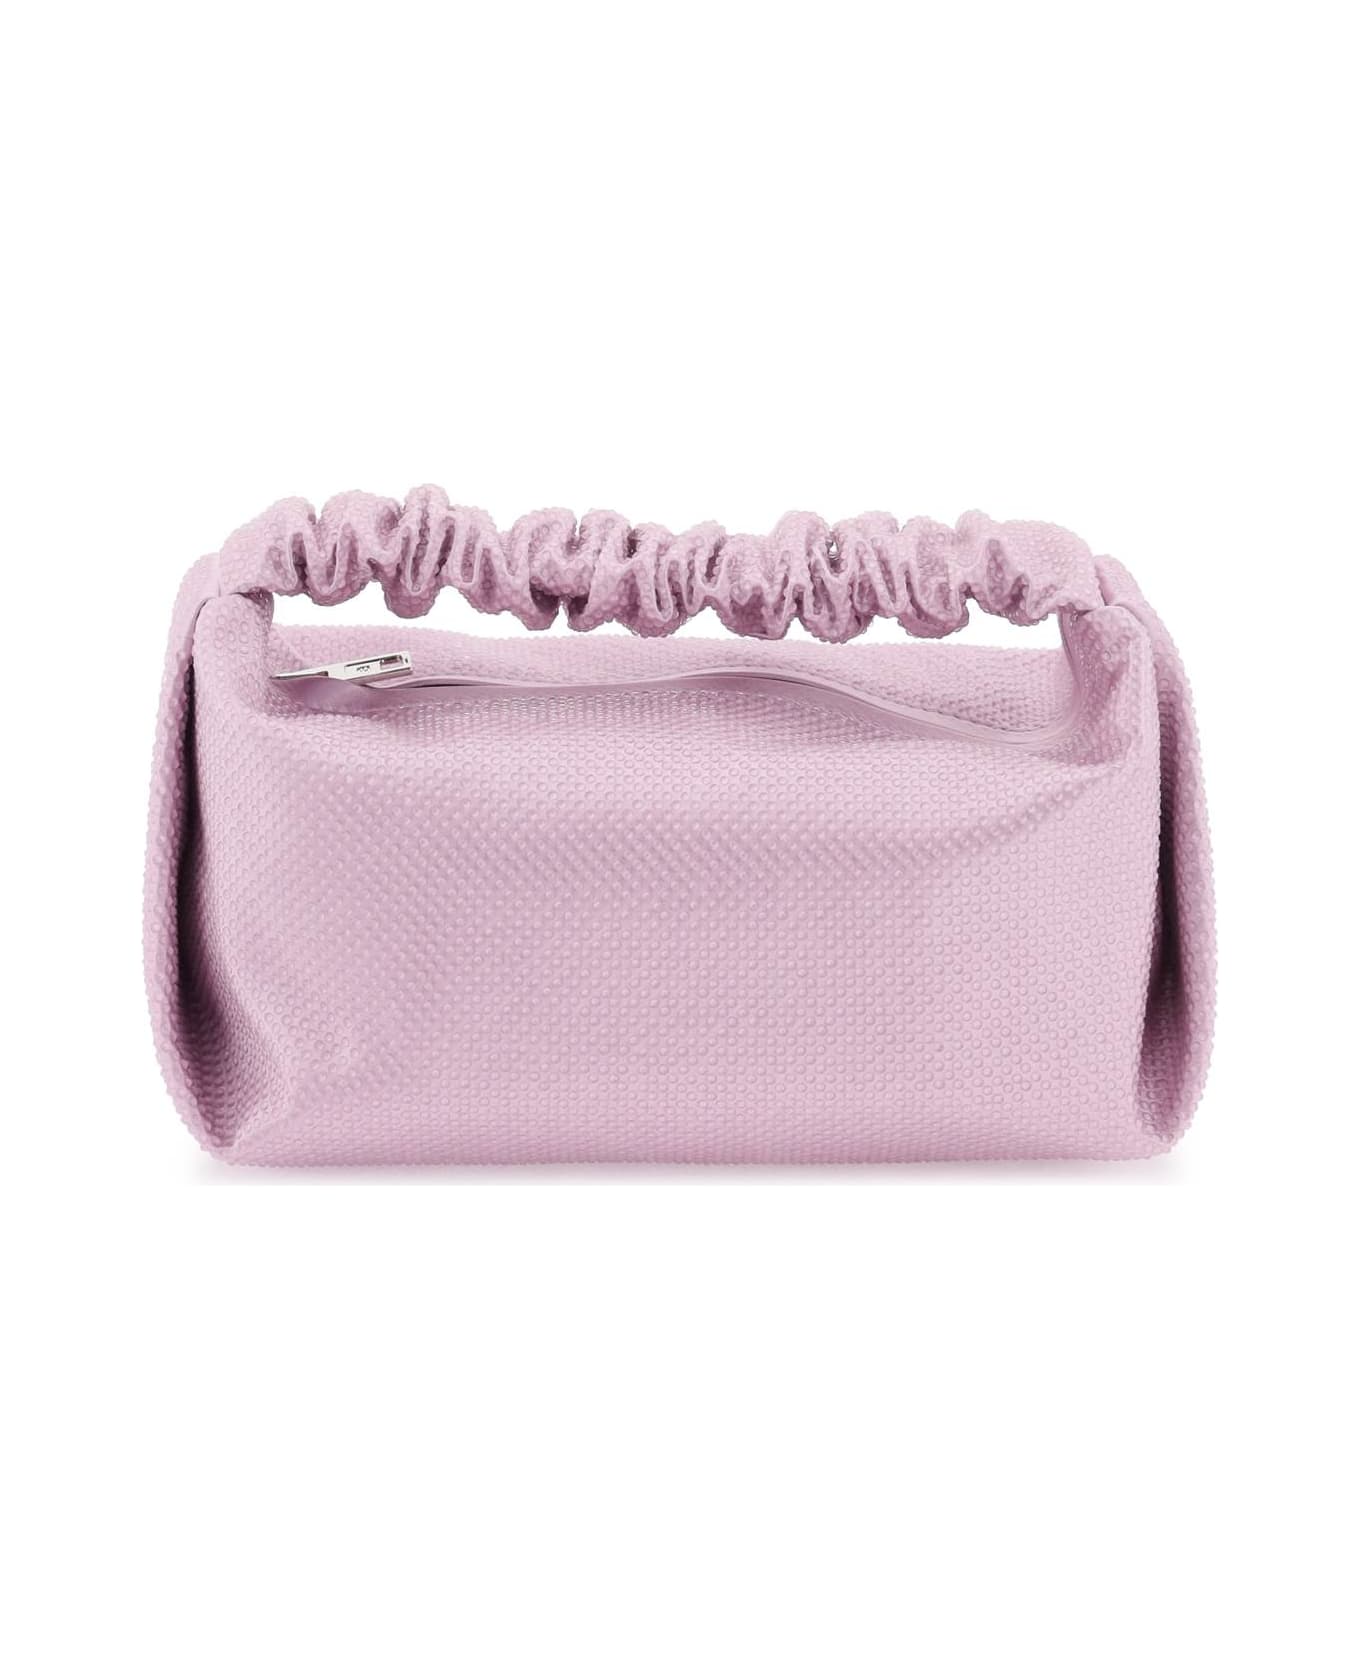 Alexander Wang Scrunchie Mini Handbag - Lilac